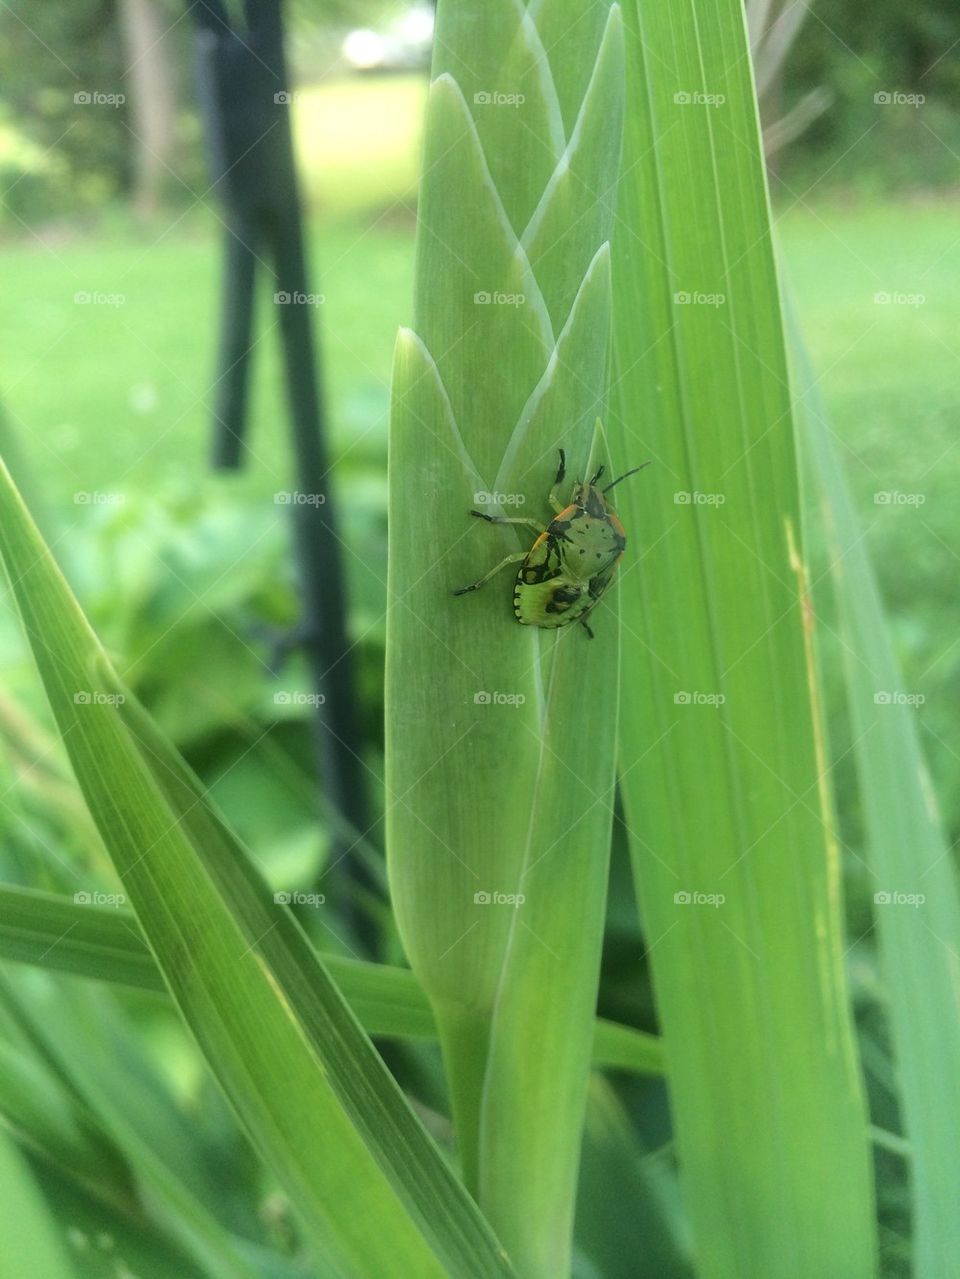 Green bug